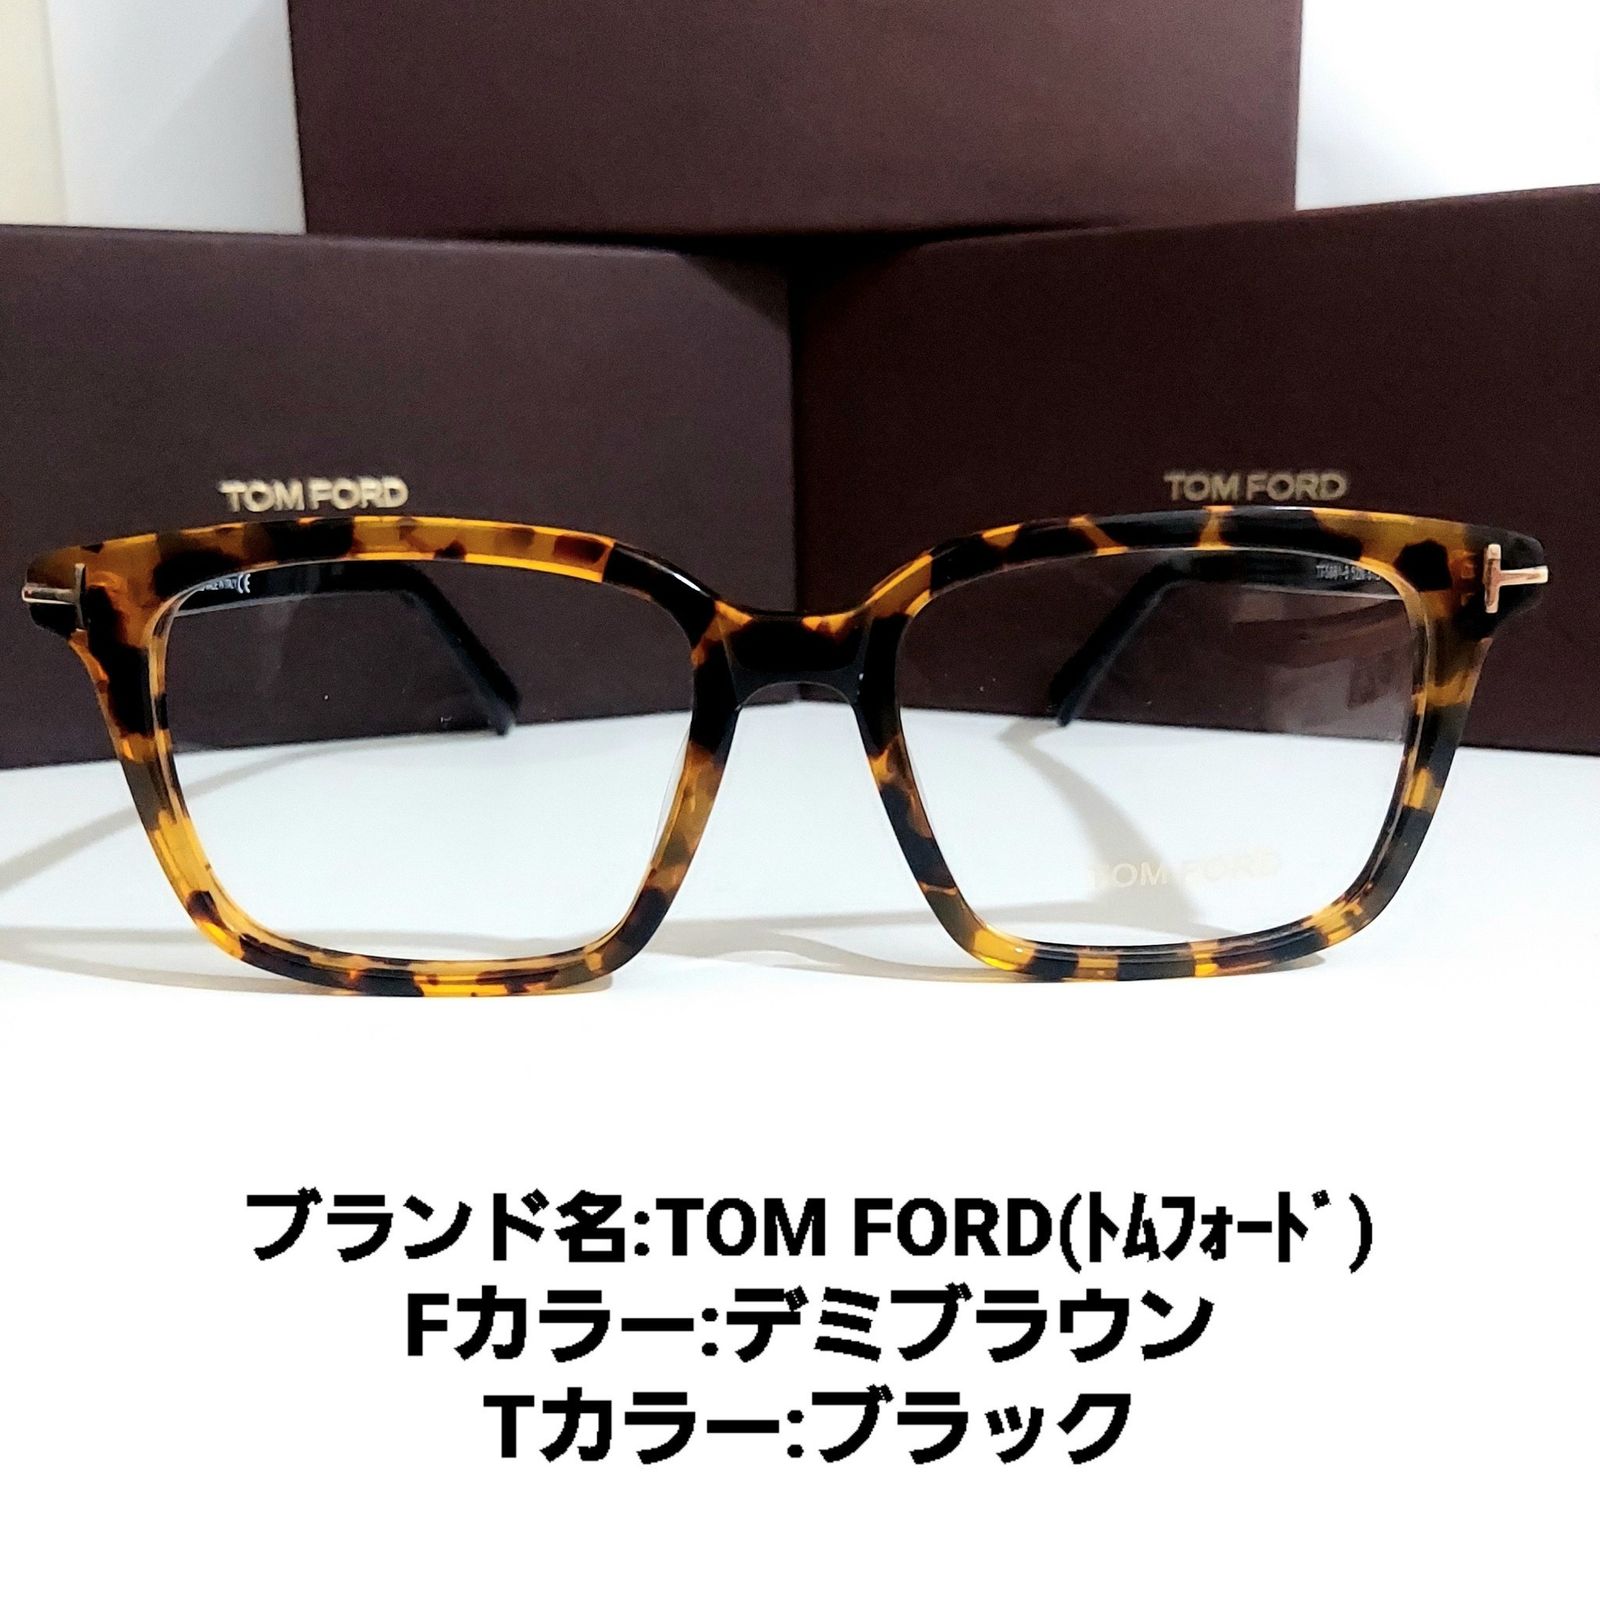 No.1800-メガネ TOM FORD【フレームのみ価格】メガネ - morahiking.com